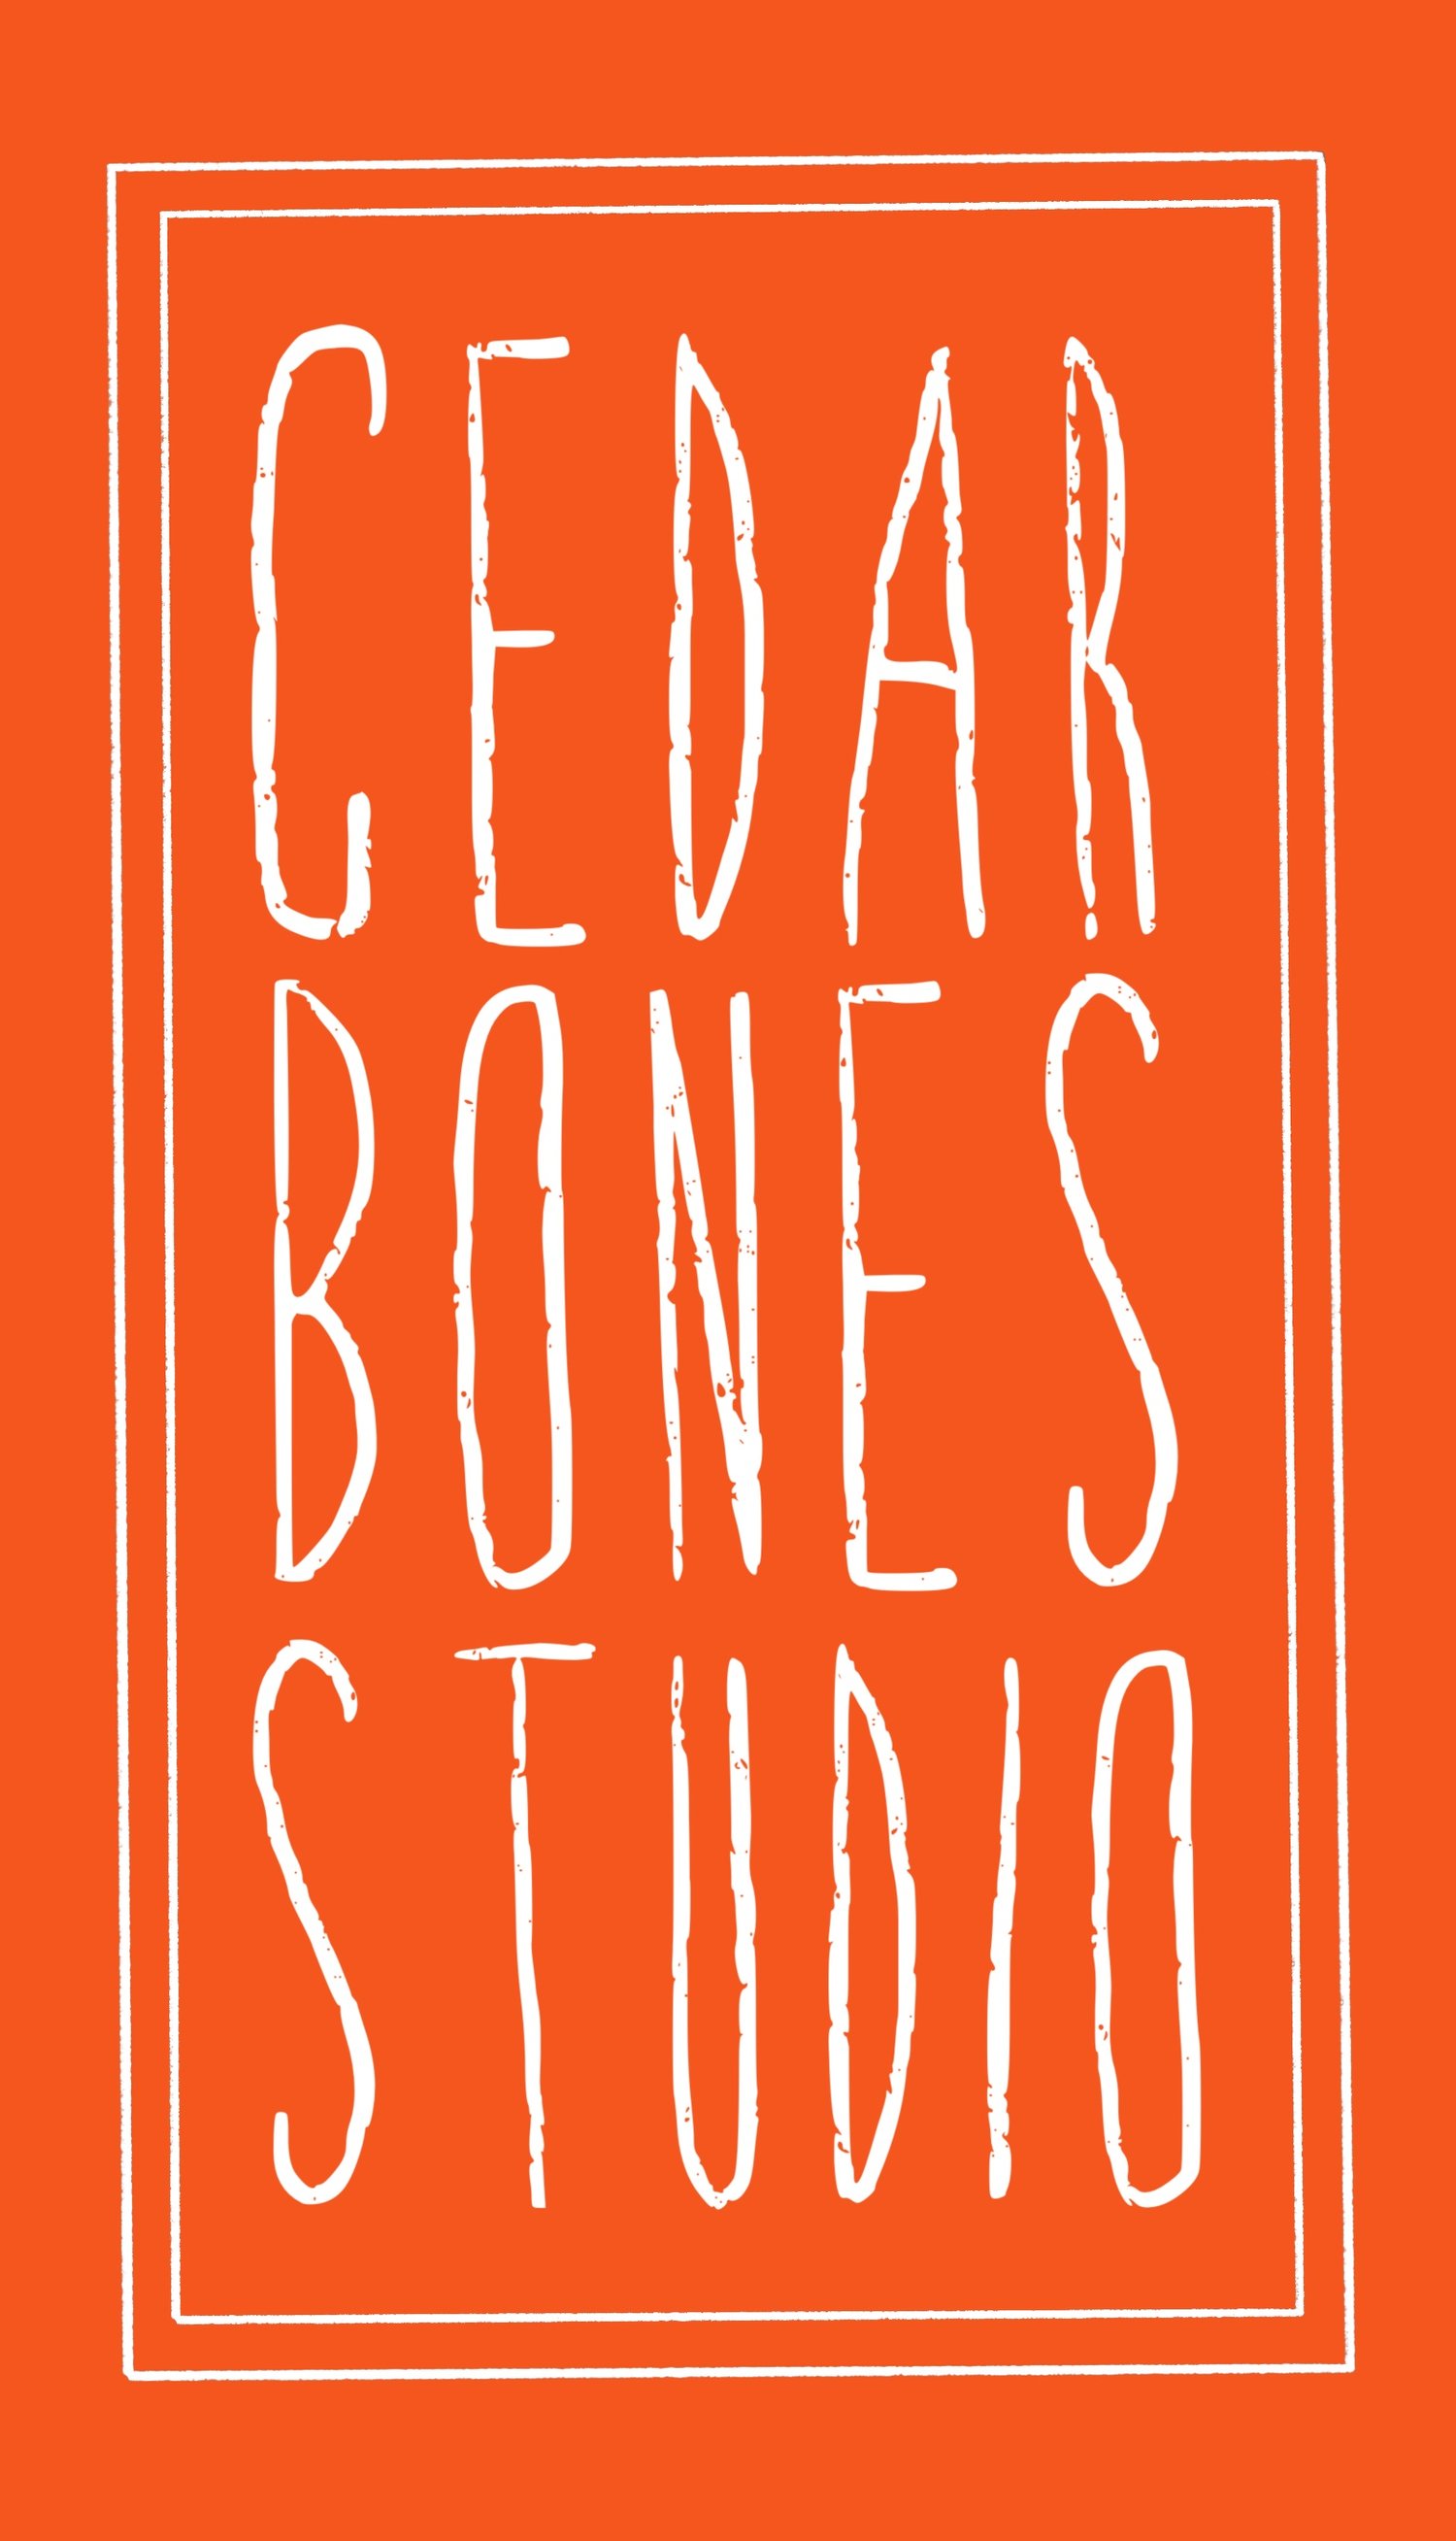 Cedar Bones Studio